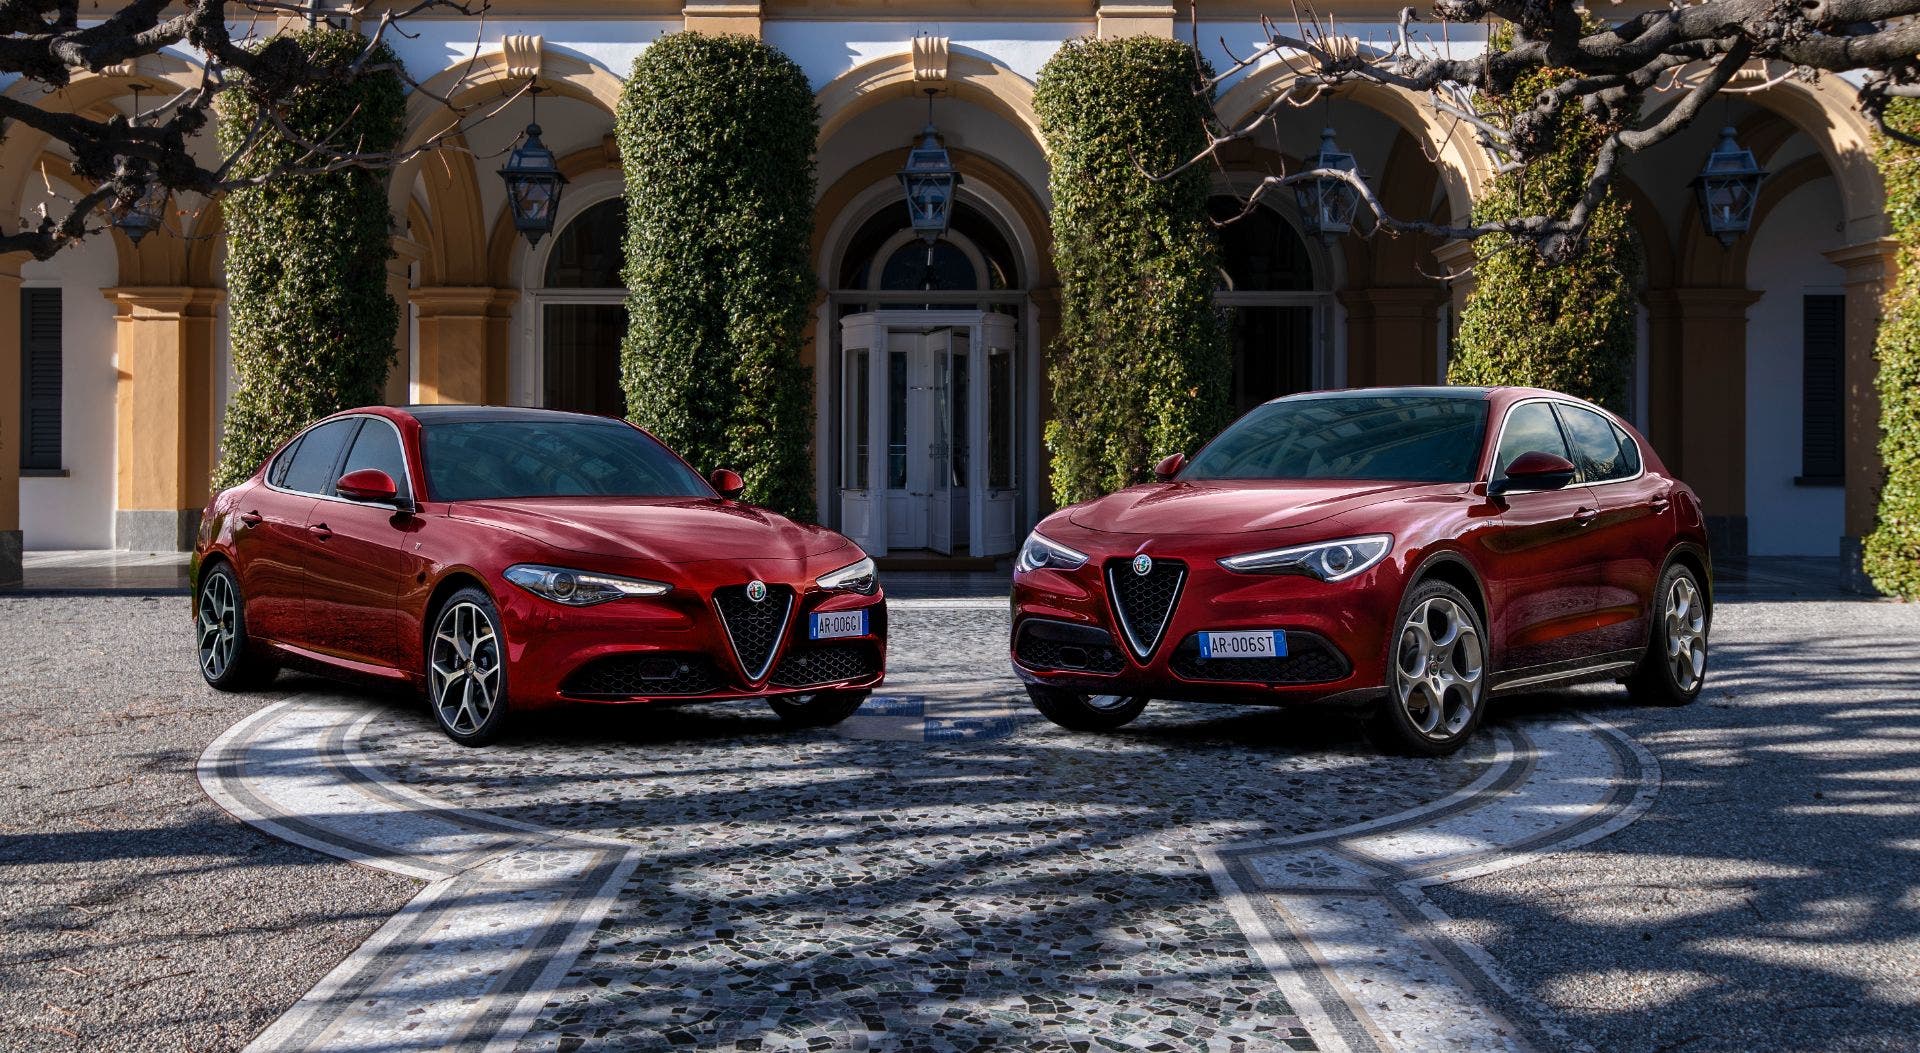 Alfa Romeo Stelvio e Giulia 6C Villa d'Este